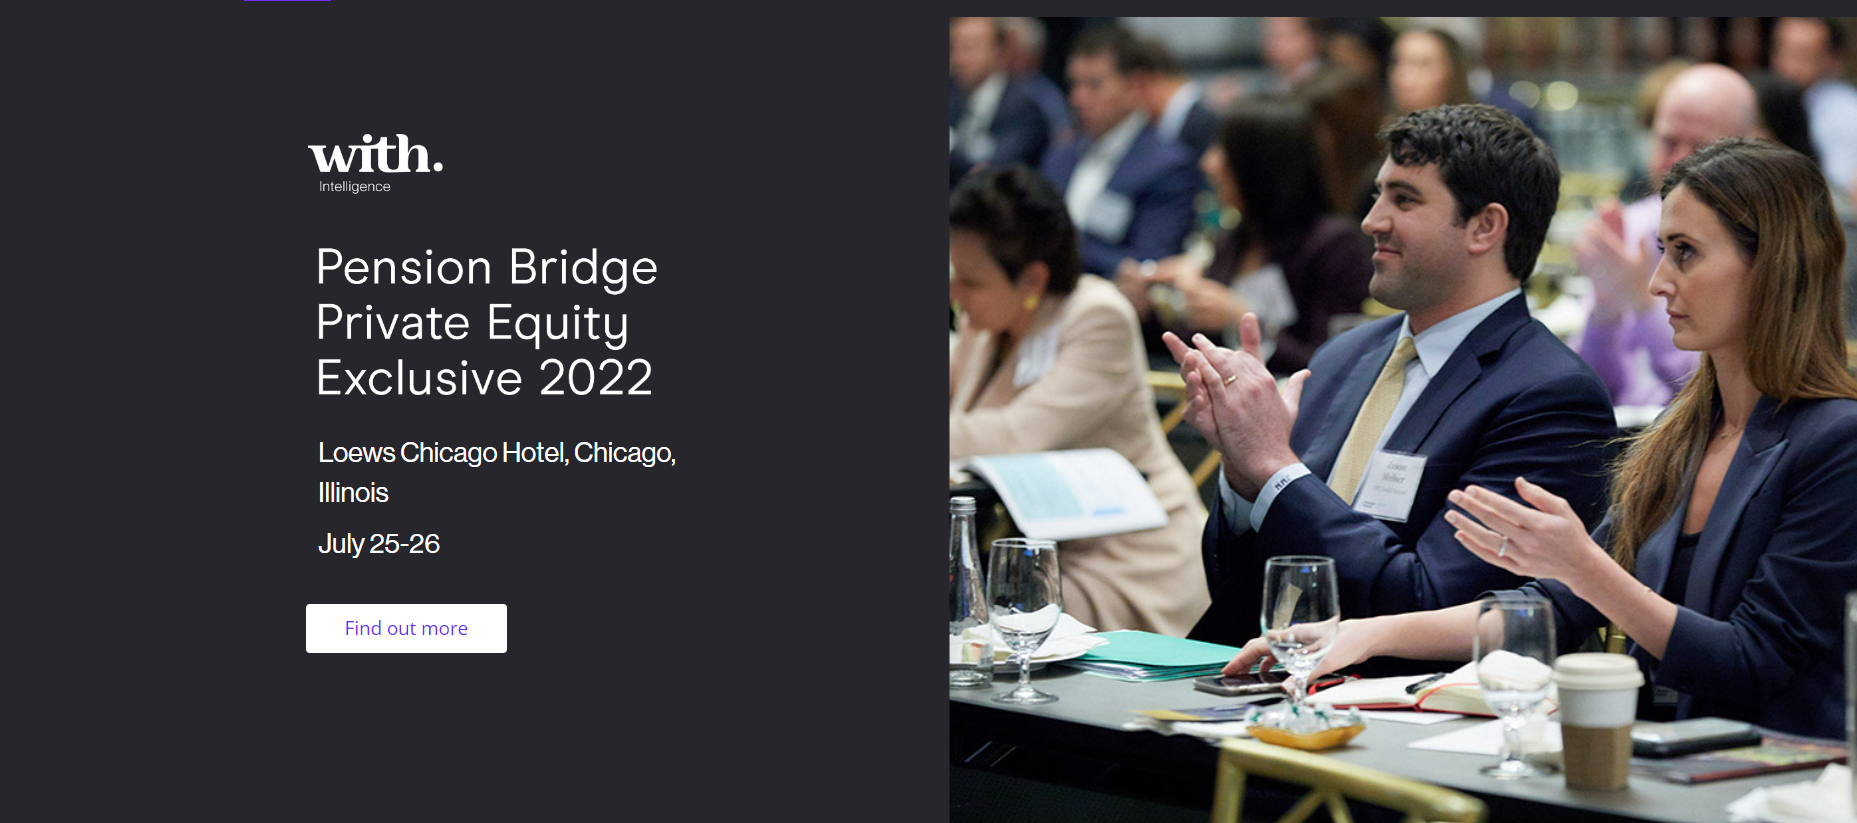 Pension Bridge Private Equity Exclusive 2022